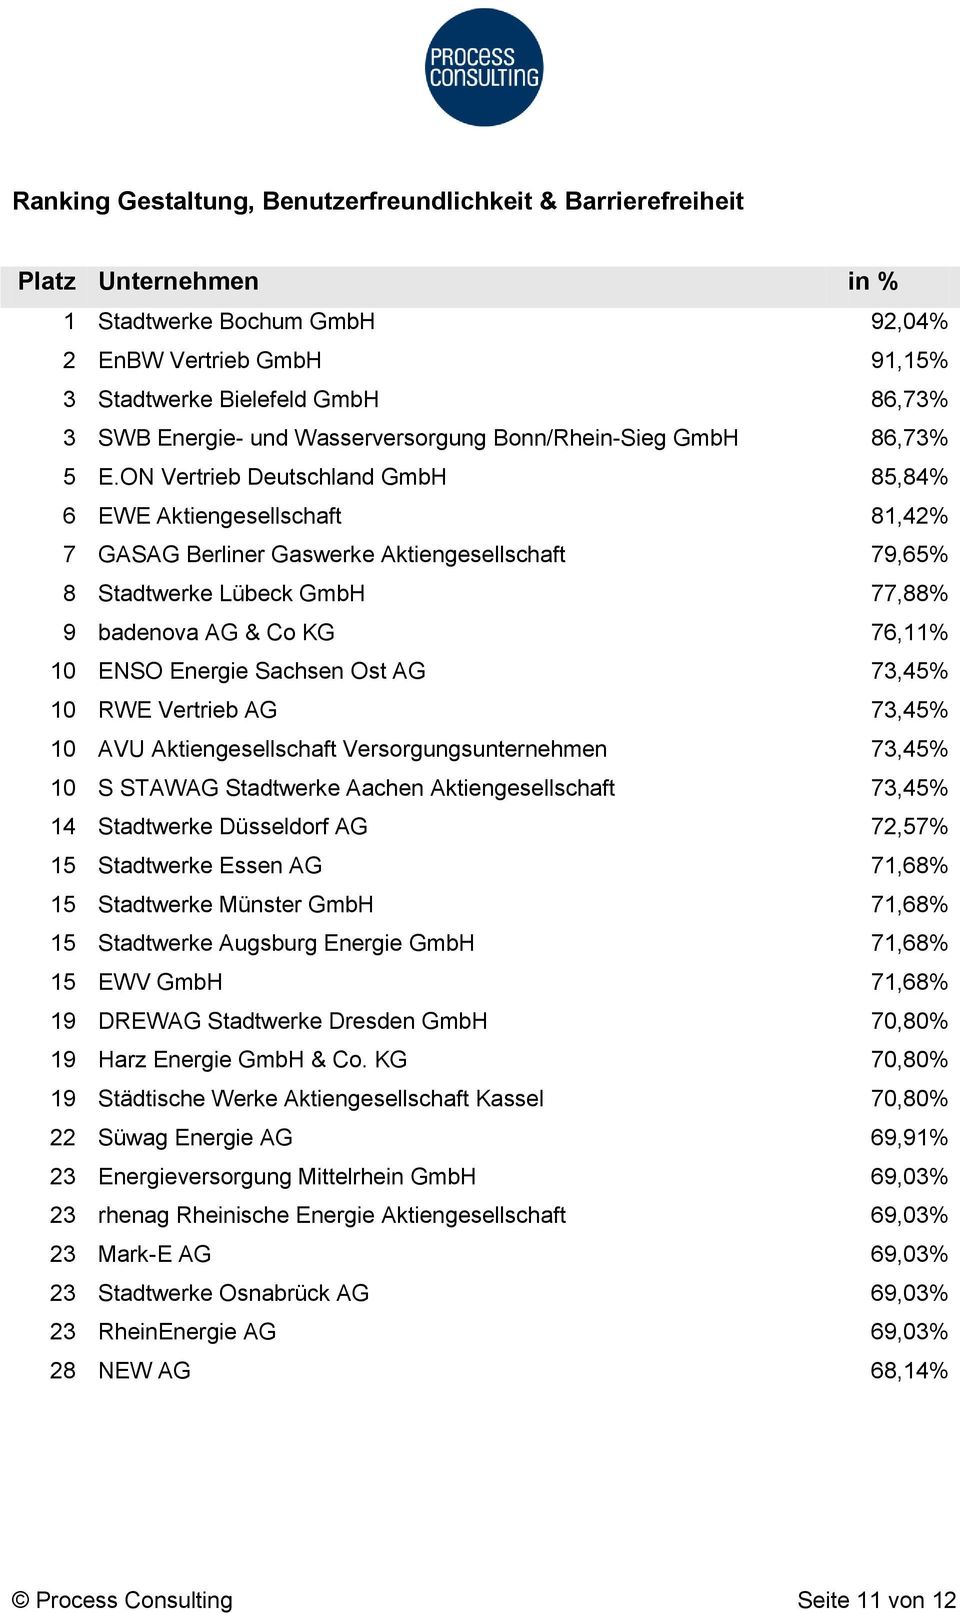 ON Vertrieb Deutschland GmbH 85,84% 6 EWE Aktiengesellschaft 81,42% 7 GASAG Berliner Gaswerke Aktiengesellschaft 79,65% 8 Stadtwerke Lübeck GmbH 77,88% 9 badenova AG & Co KG 76,11% 10 ENSO Energie